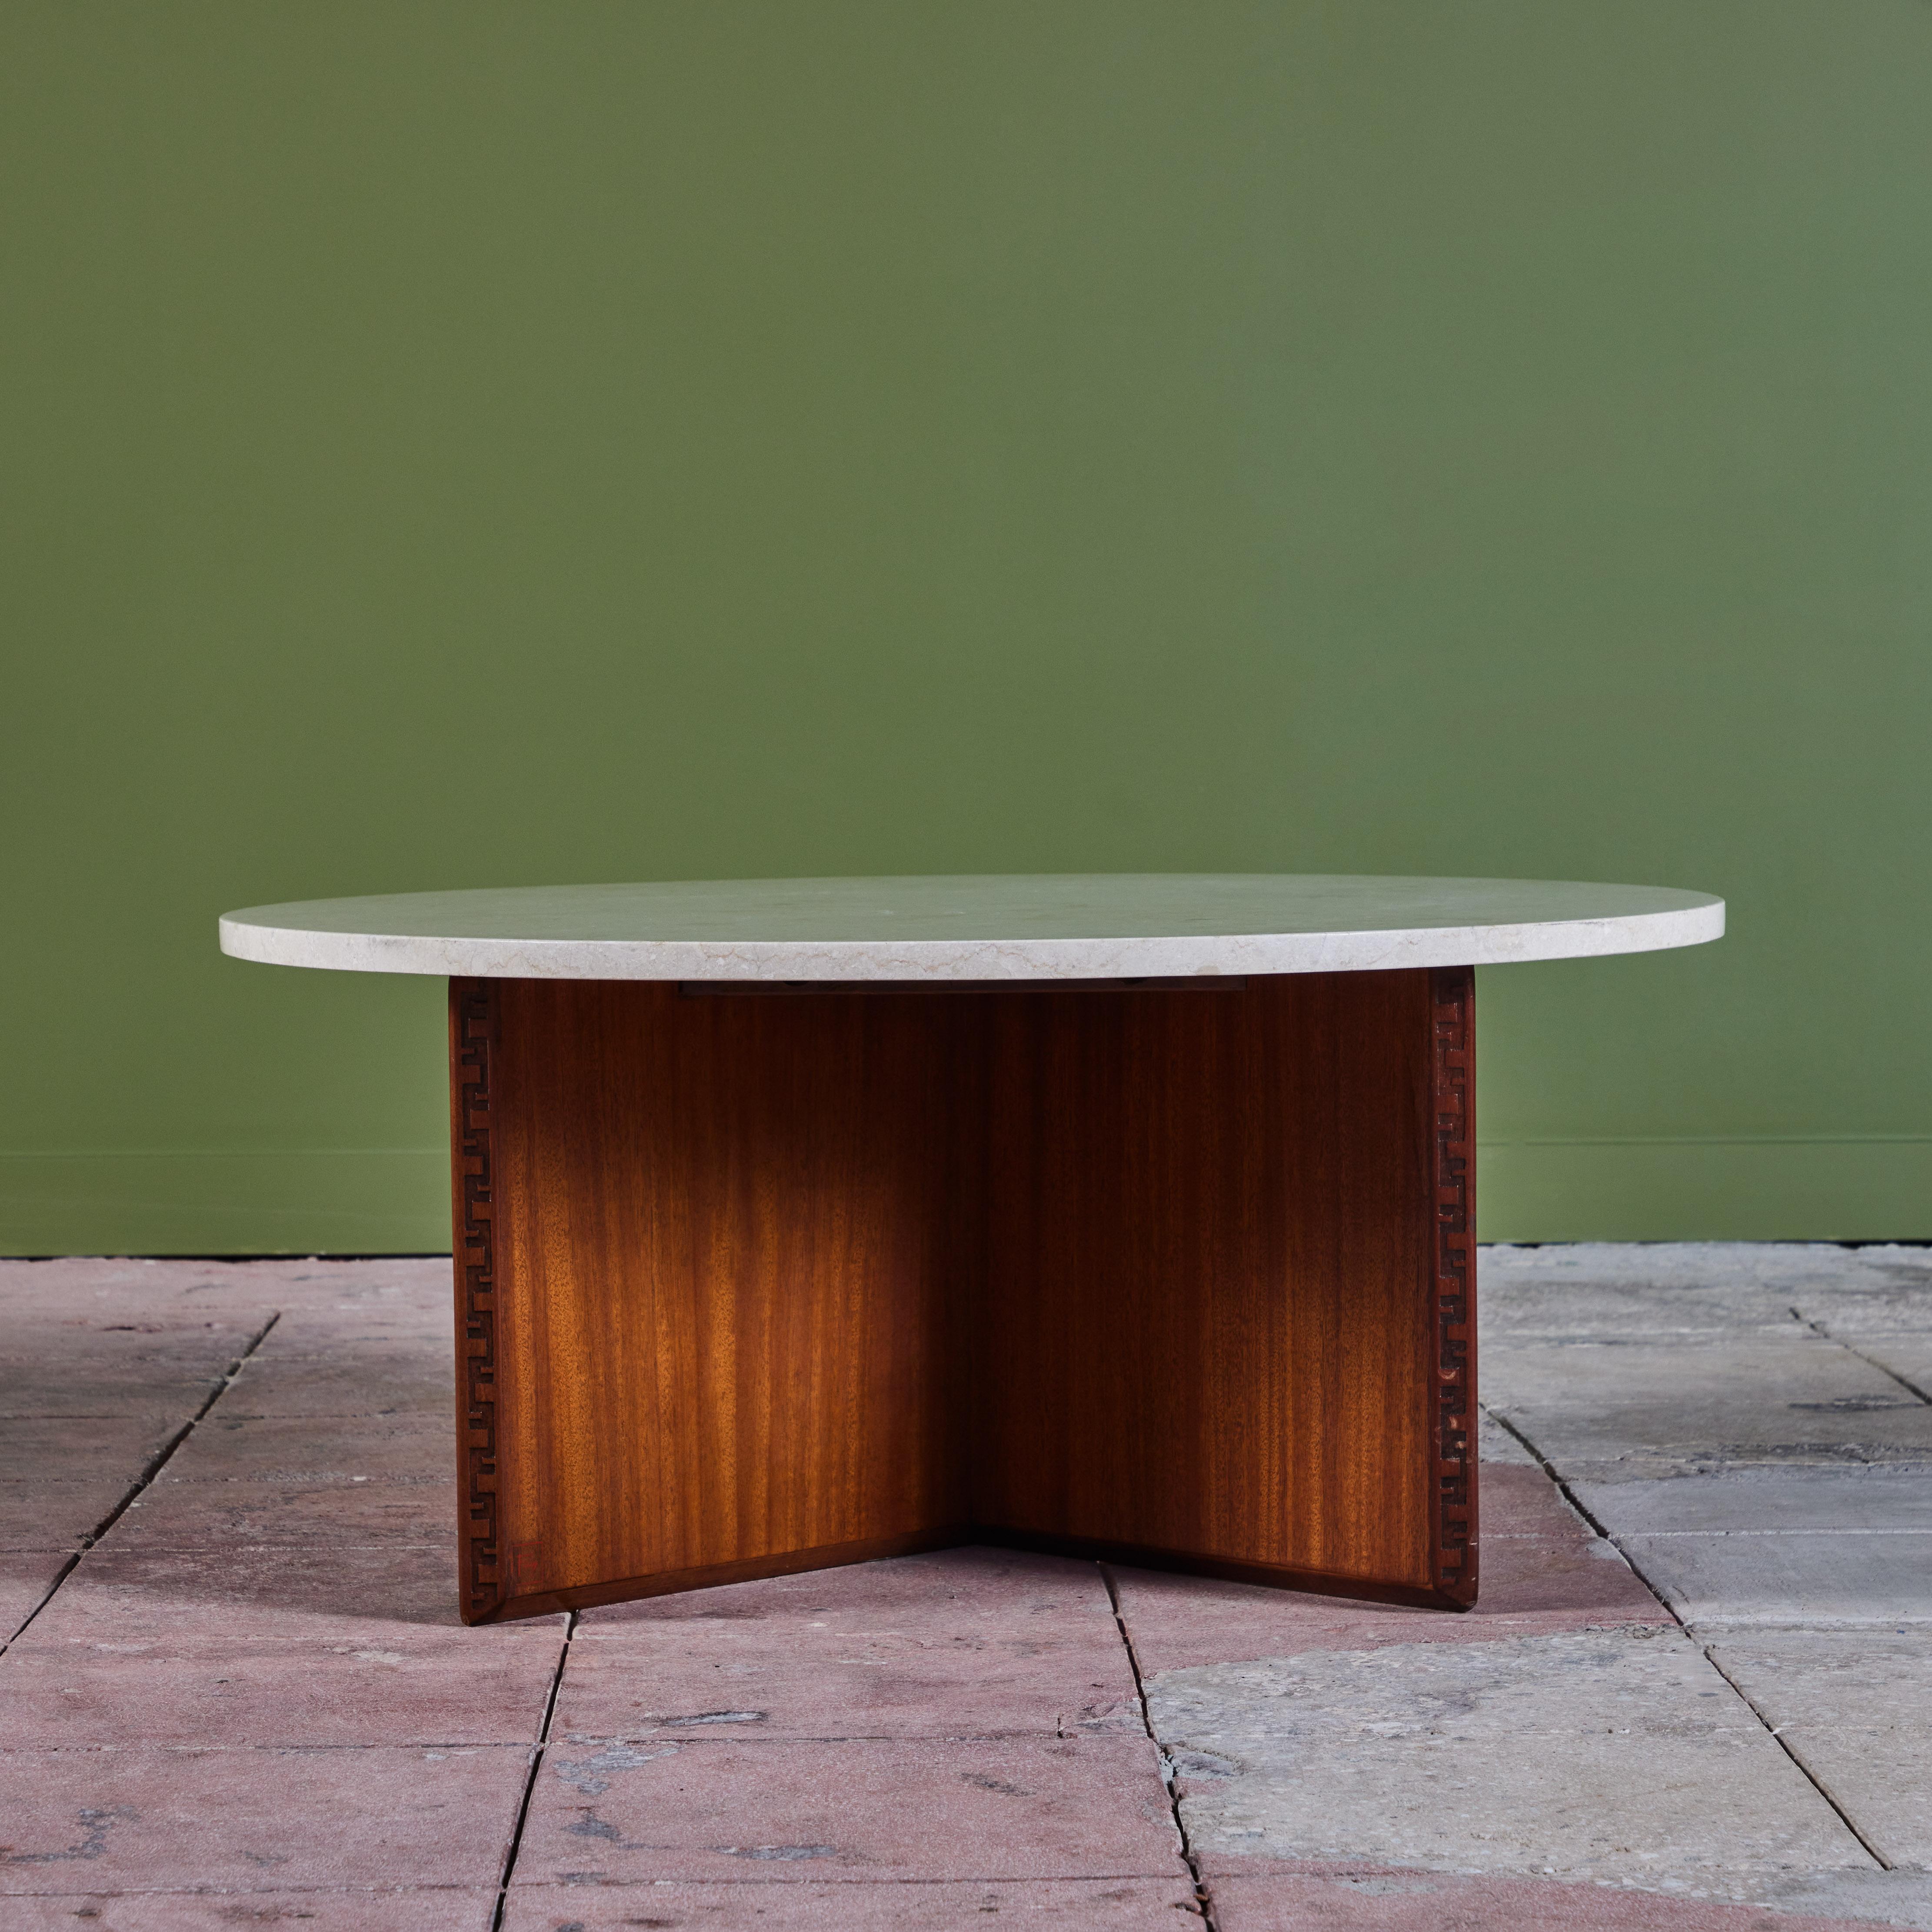 Prairie School Frank Lloyd Wright Marble Top “Taliesin” Coffee Table for Heritage-Henredon